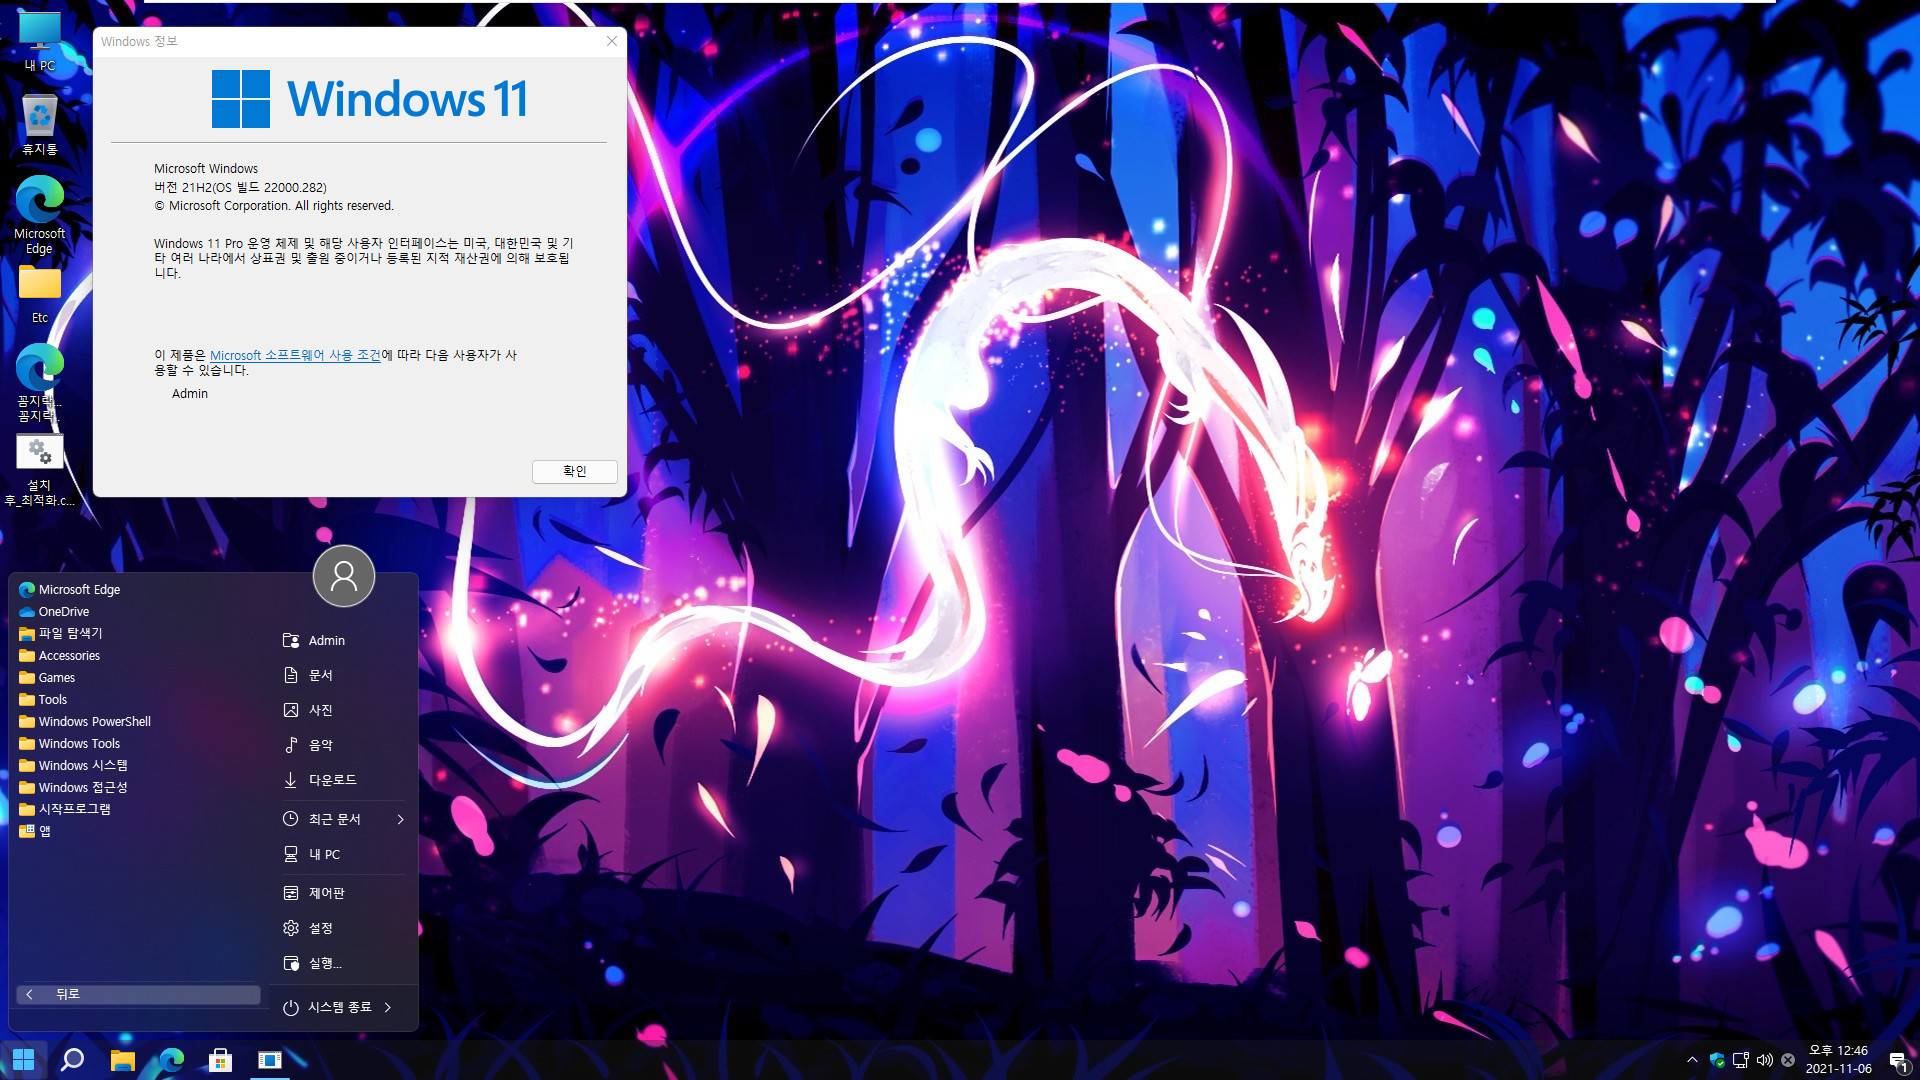 Windows 11 Pro (22000.282) FBConan_Phoenix_20211106.vhd 설치 테스트 2021-11-06_124650.jpg